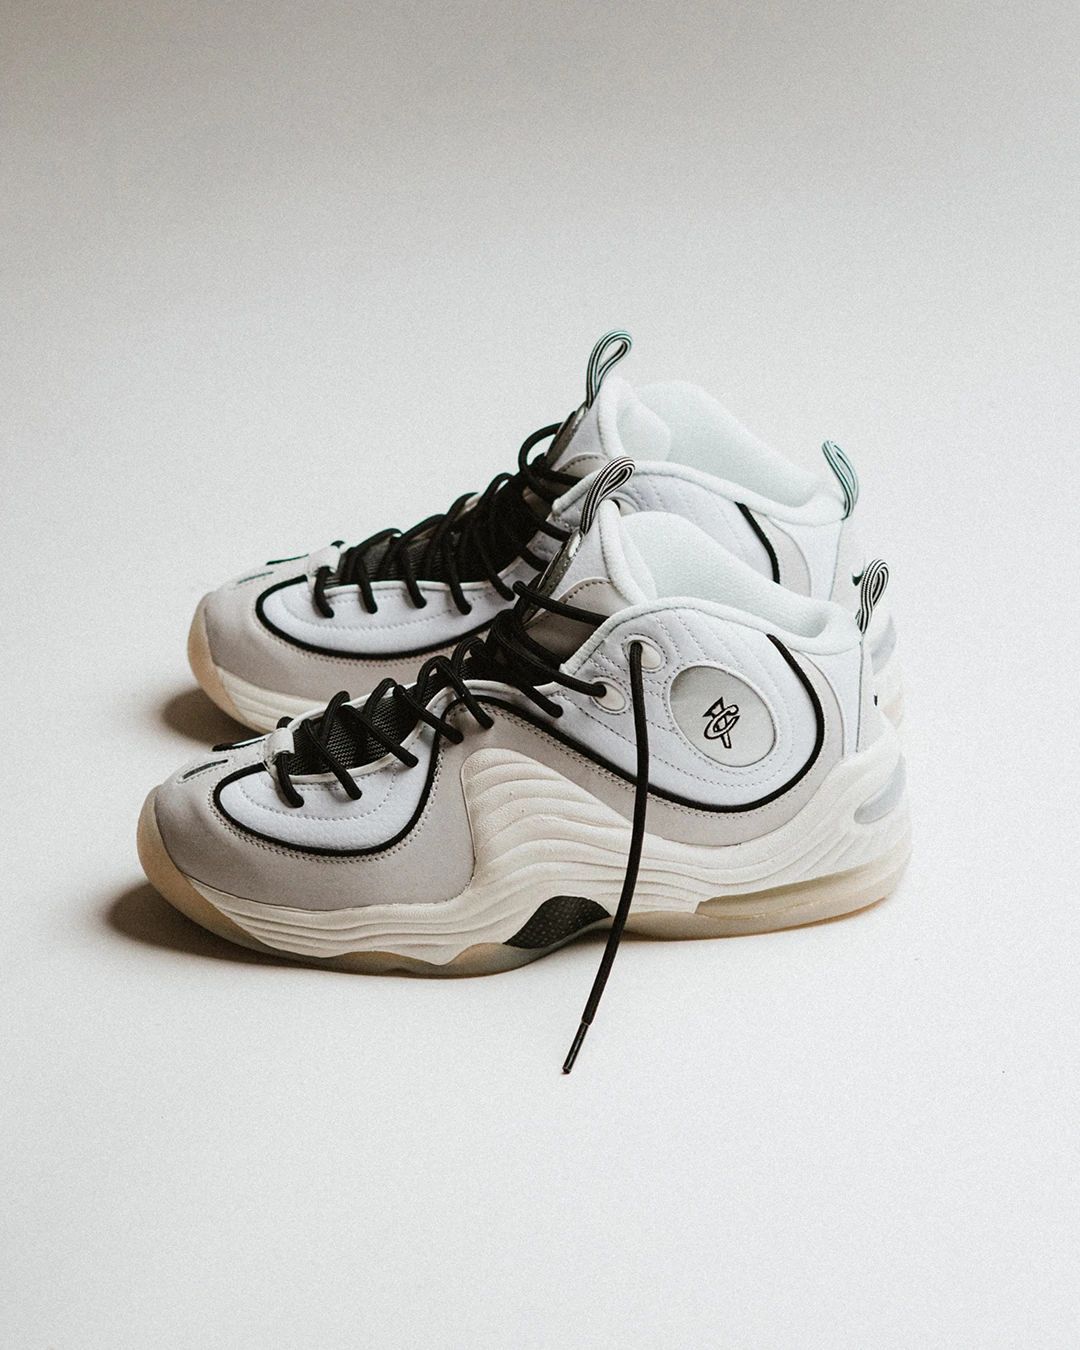 On-Feet Photos Of The Supreme x Air Jordan 5 “Camo” — Sneaker Shouts